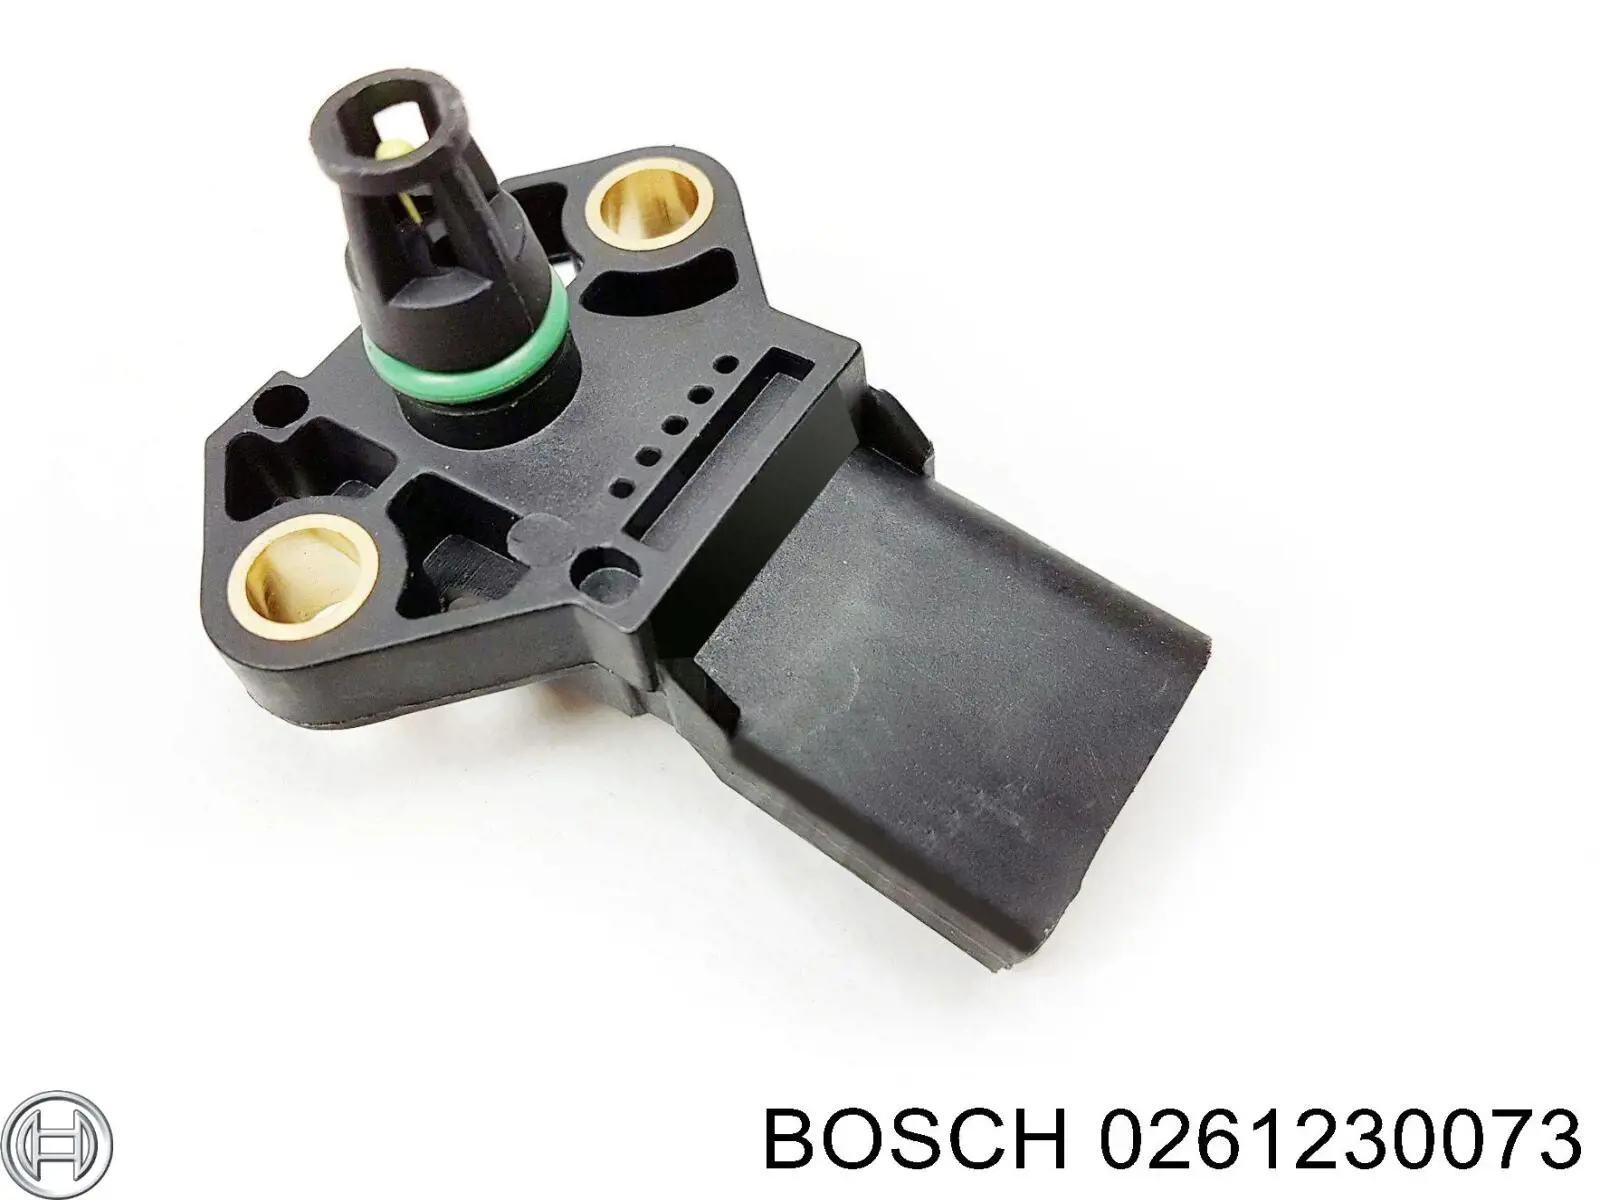 0261230073 Bosch sensor de presion de carga (inyeccion de aire turbina)